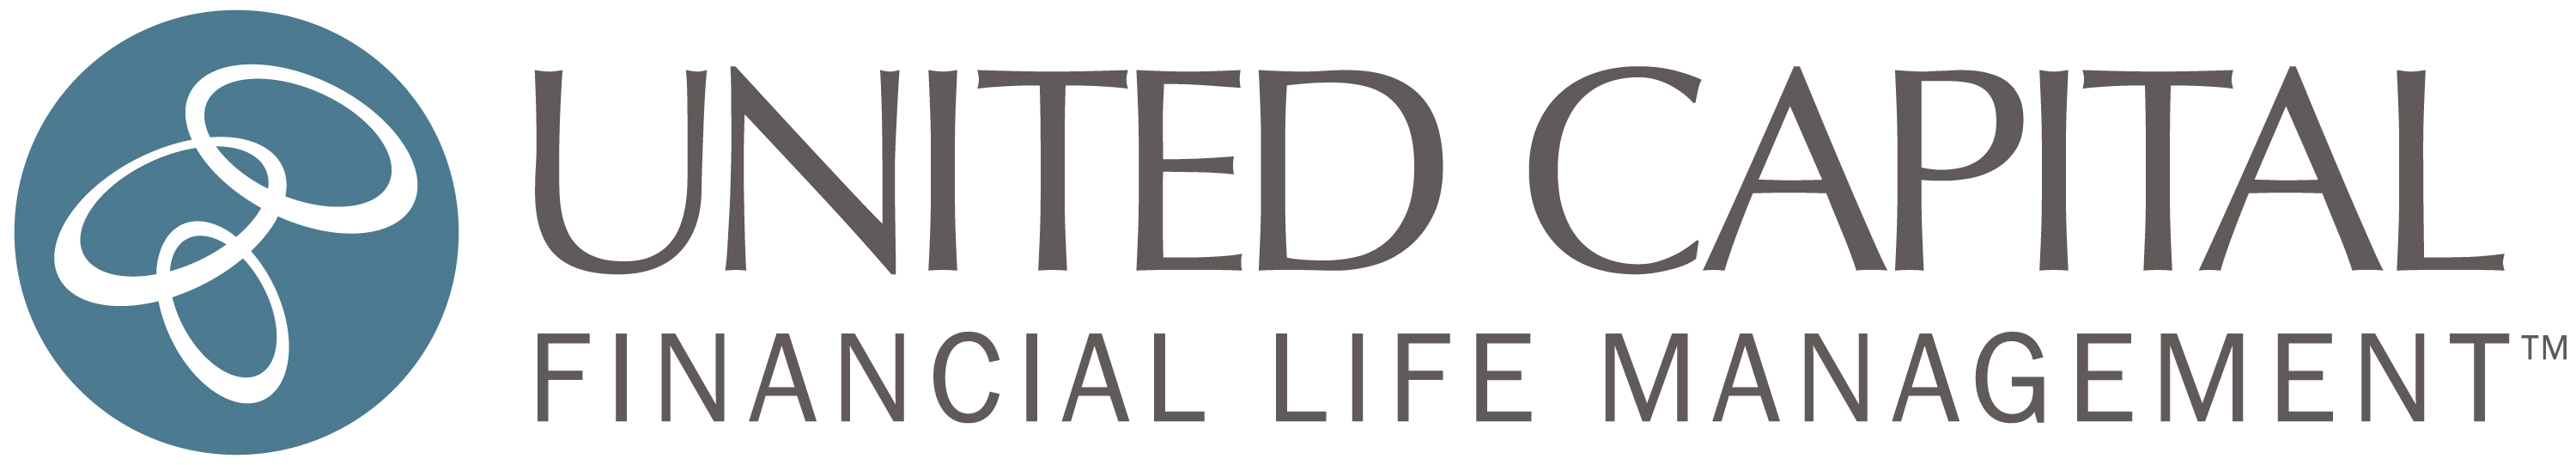 United Capital Financial Life Management